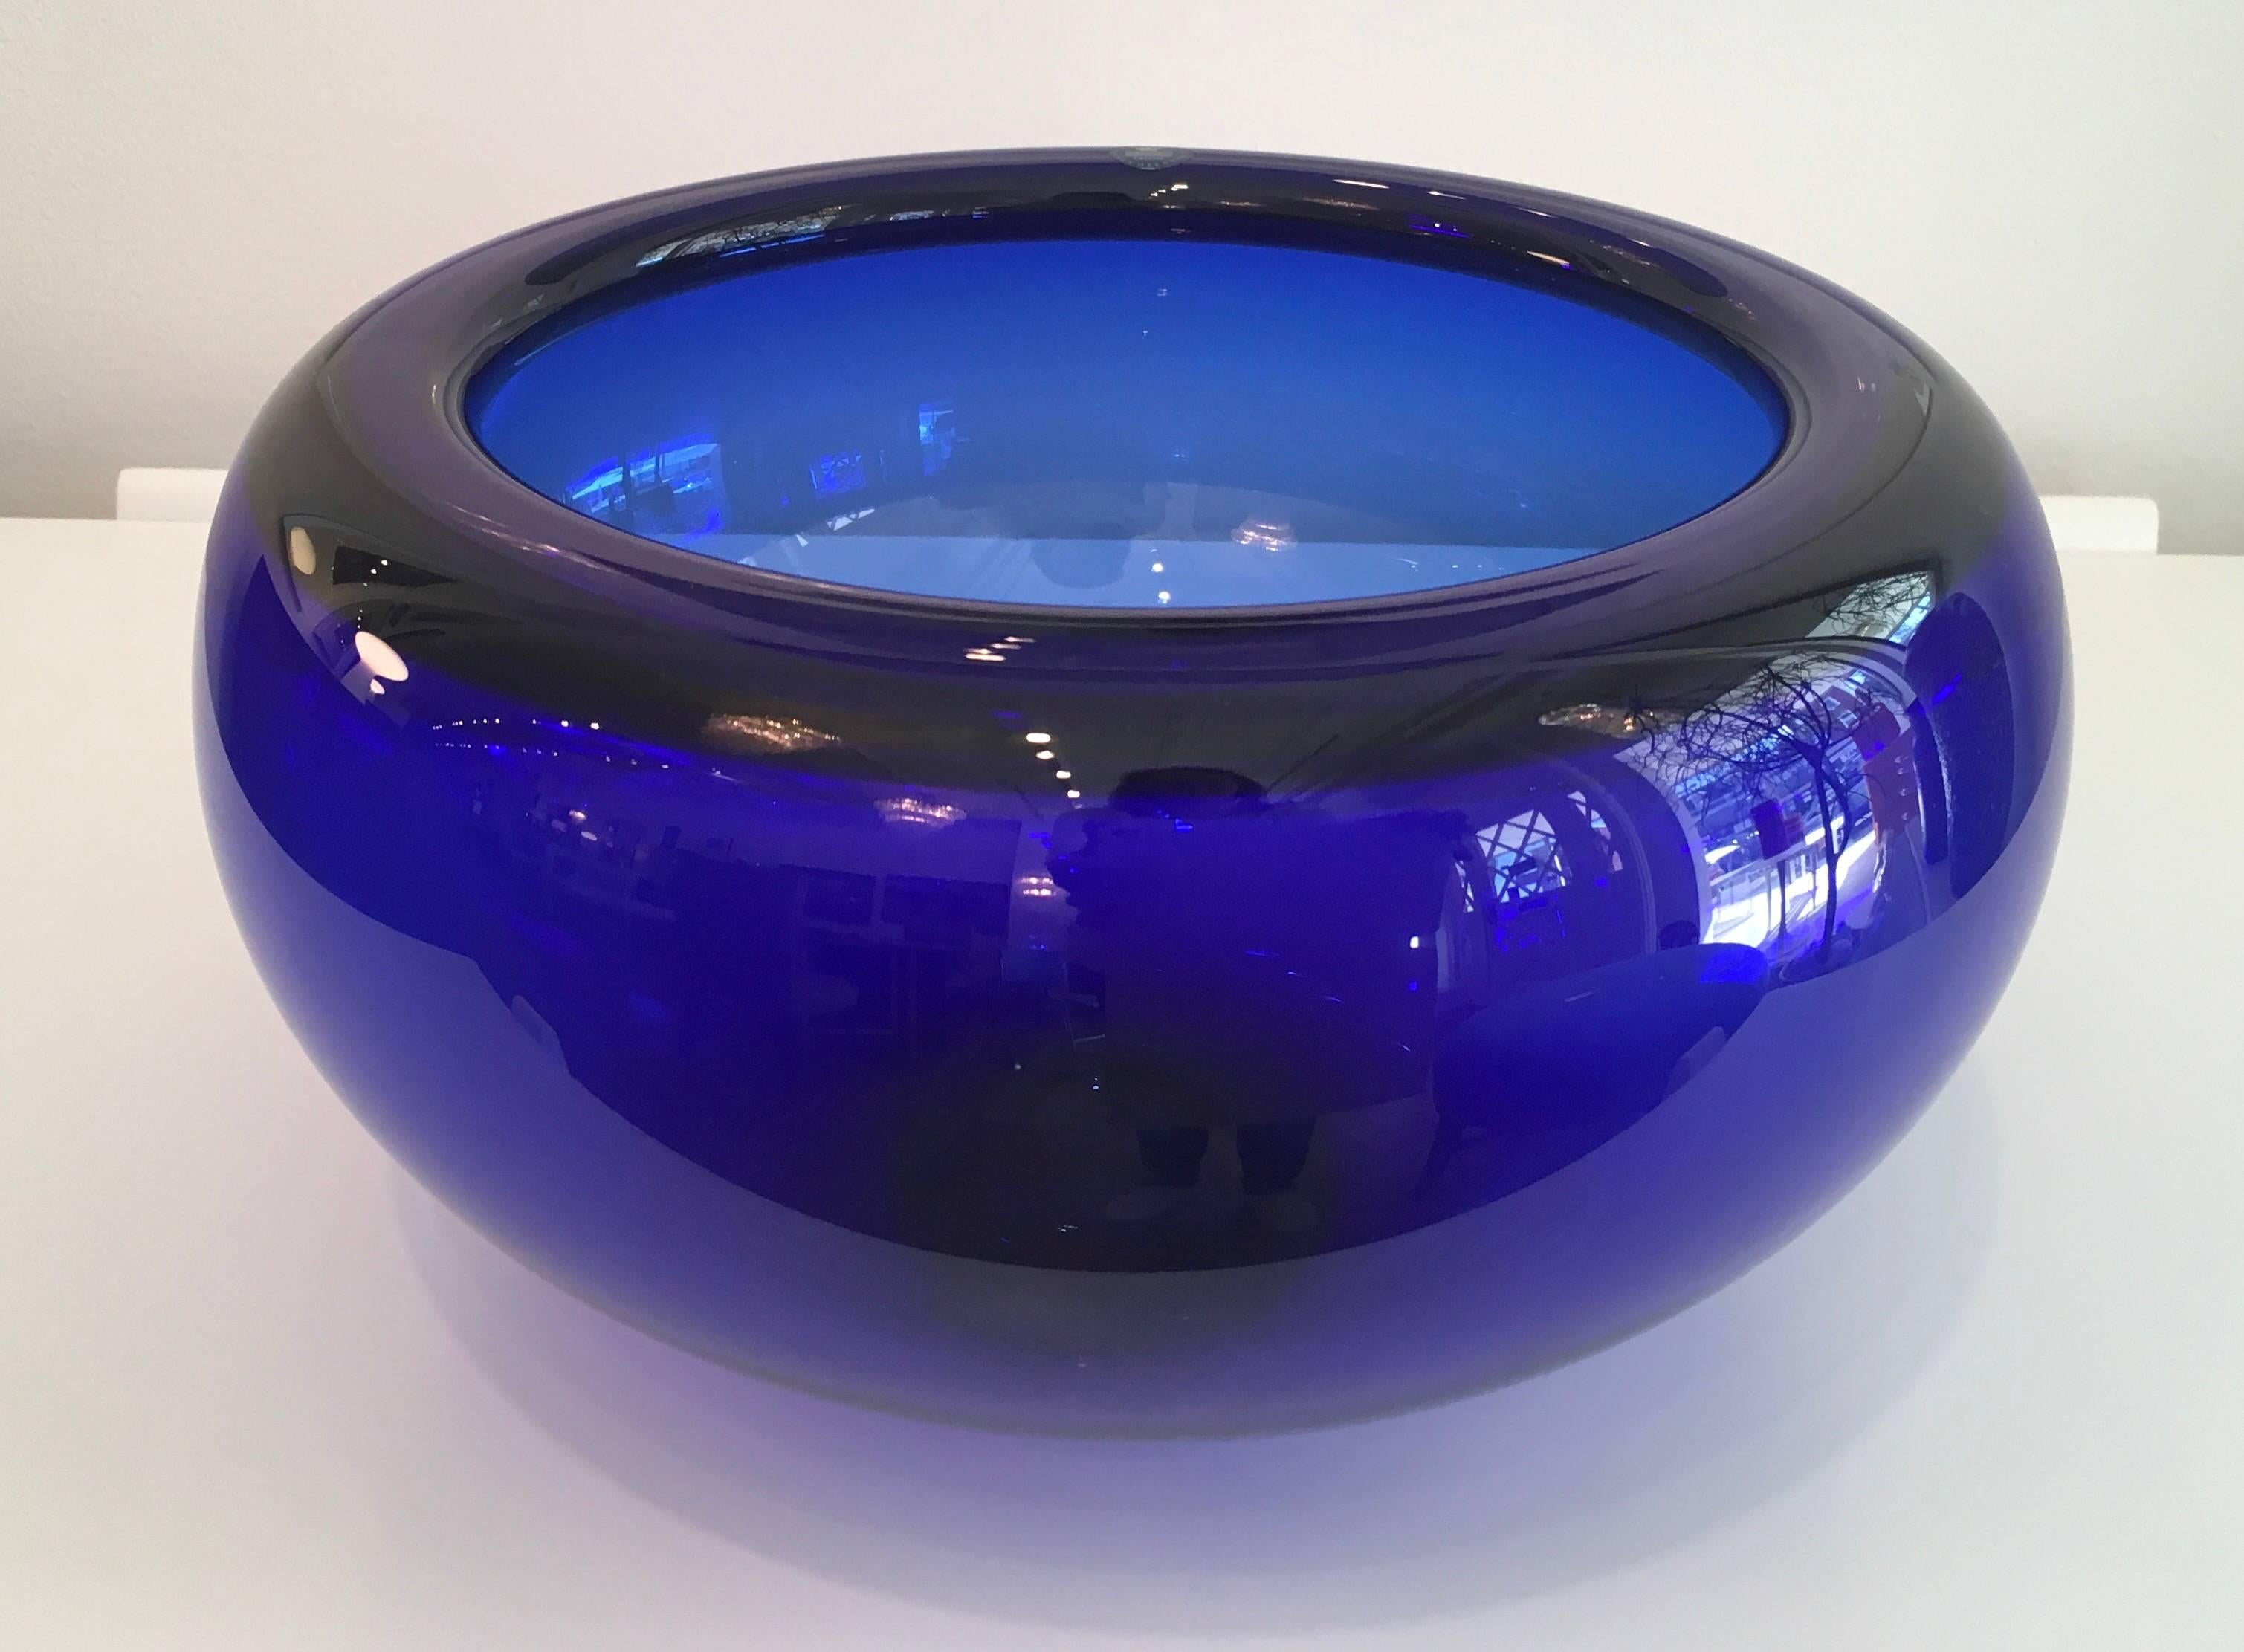 Large Royal Copenhagen bowl in deep blue crystal. Designed by Per Lutken in 1950s. Maker's label still attached.